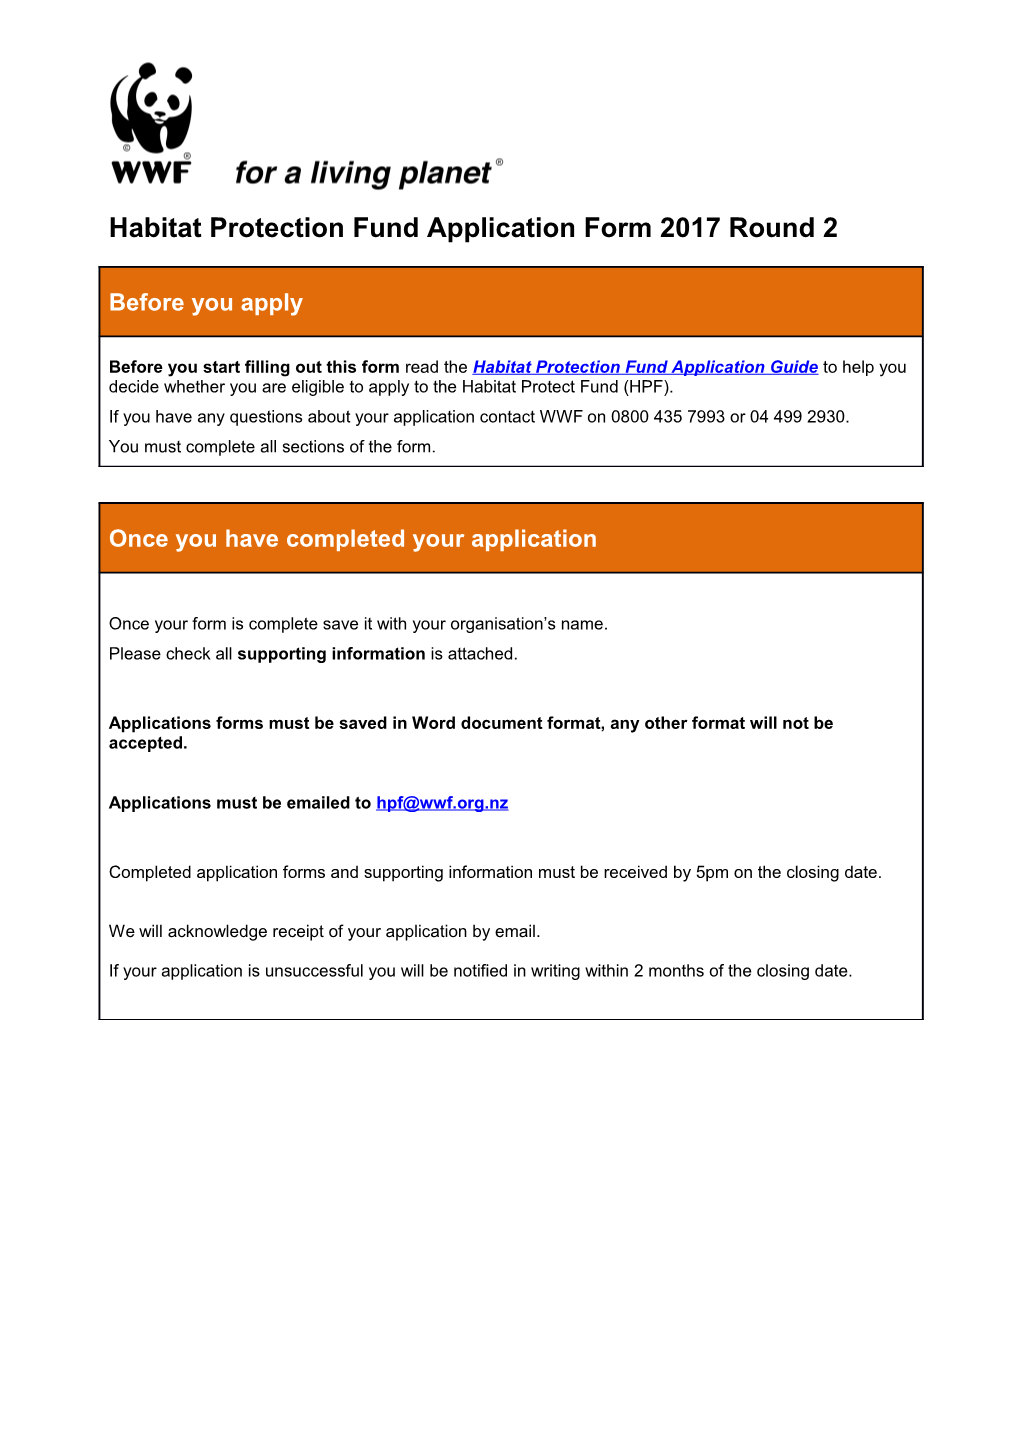 Habitat Protection Fund Application Form 2017 Round 2